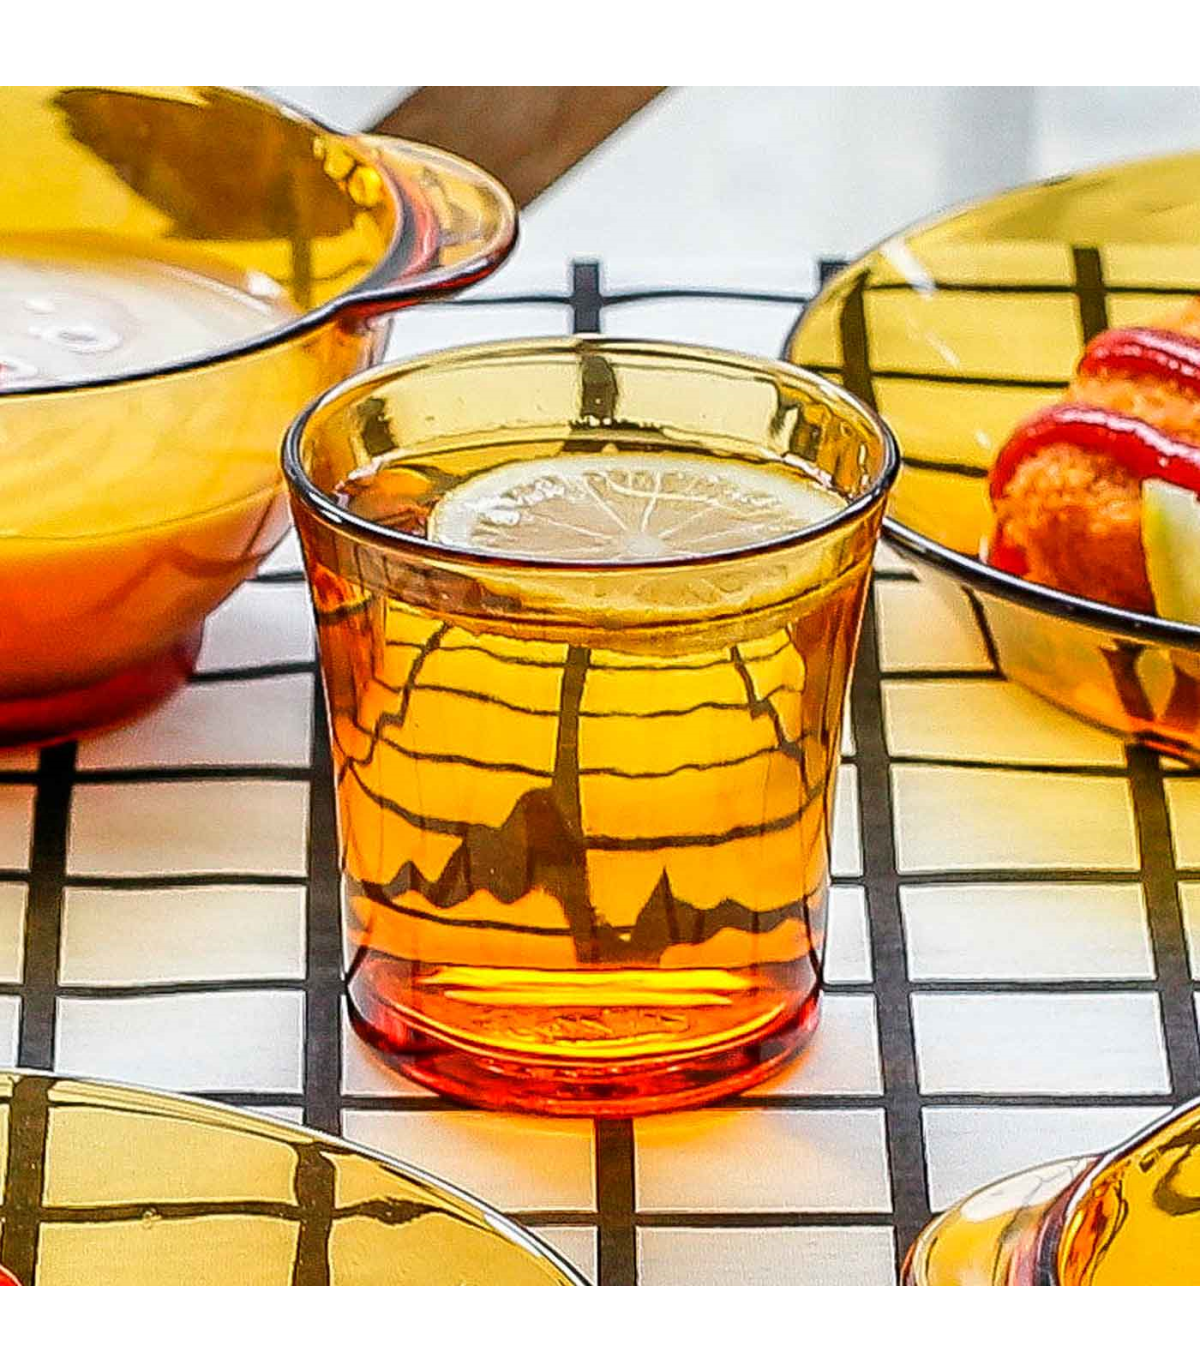 Tradineur - Set de 6 vasos de cristal modelo Adora, base gruesa, aptos  para lavavajillas, servir cócteles, cerveza, refrescos